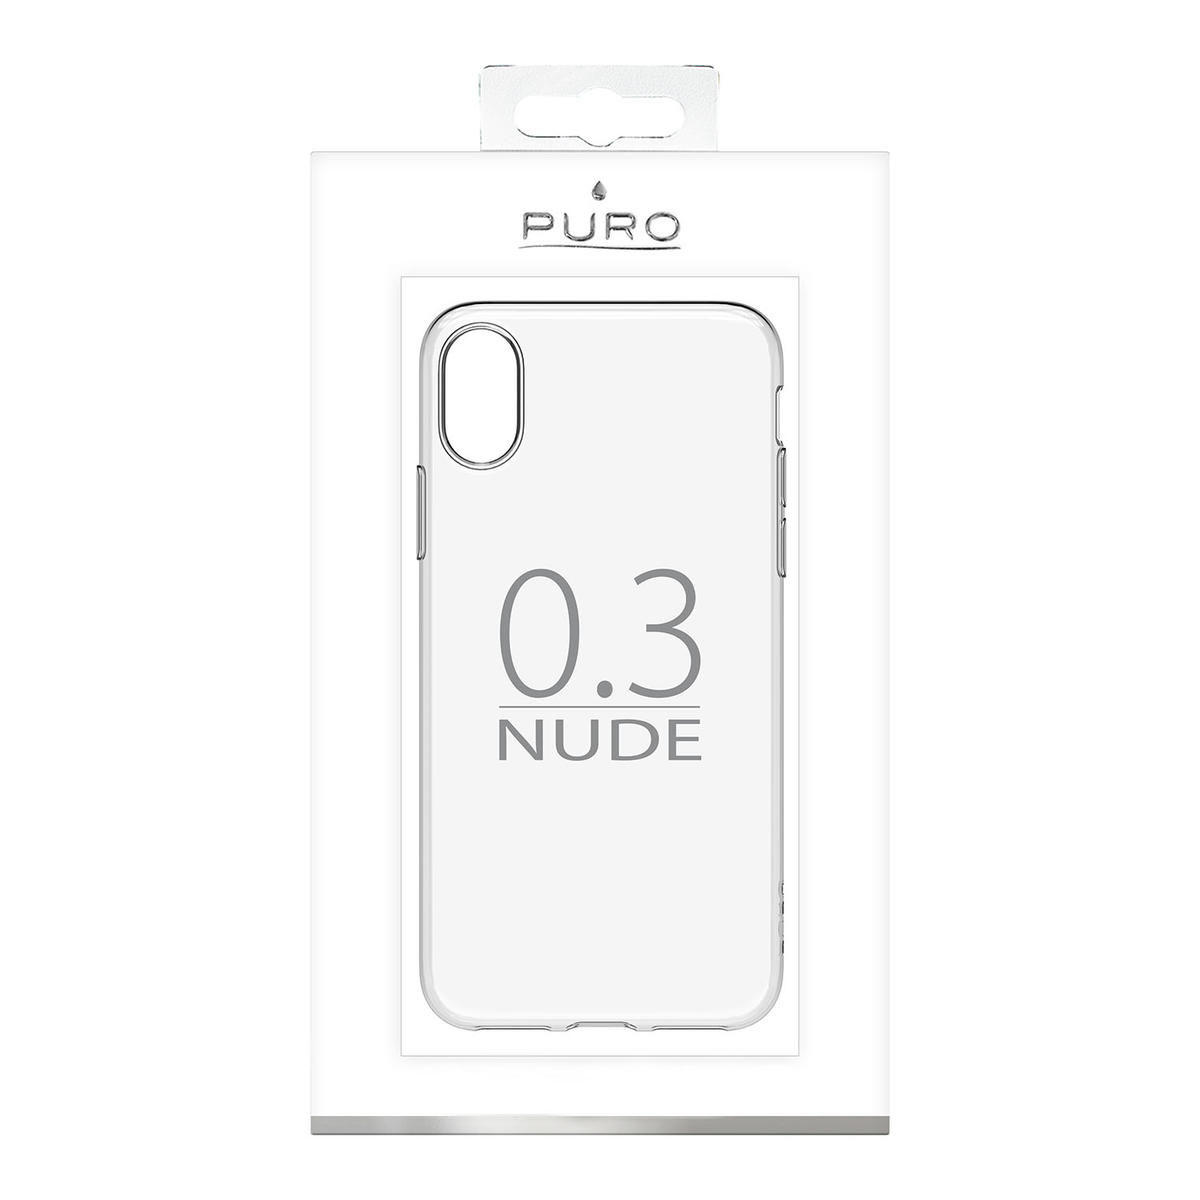 Comprar Puro Nude Funda iPhone Xs Max 0,3mm Transparente 